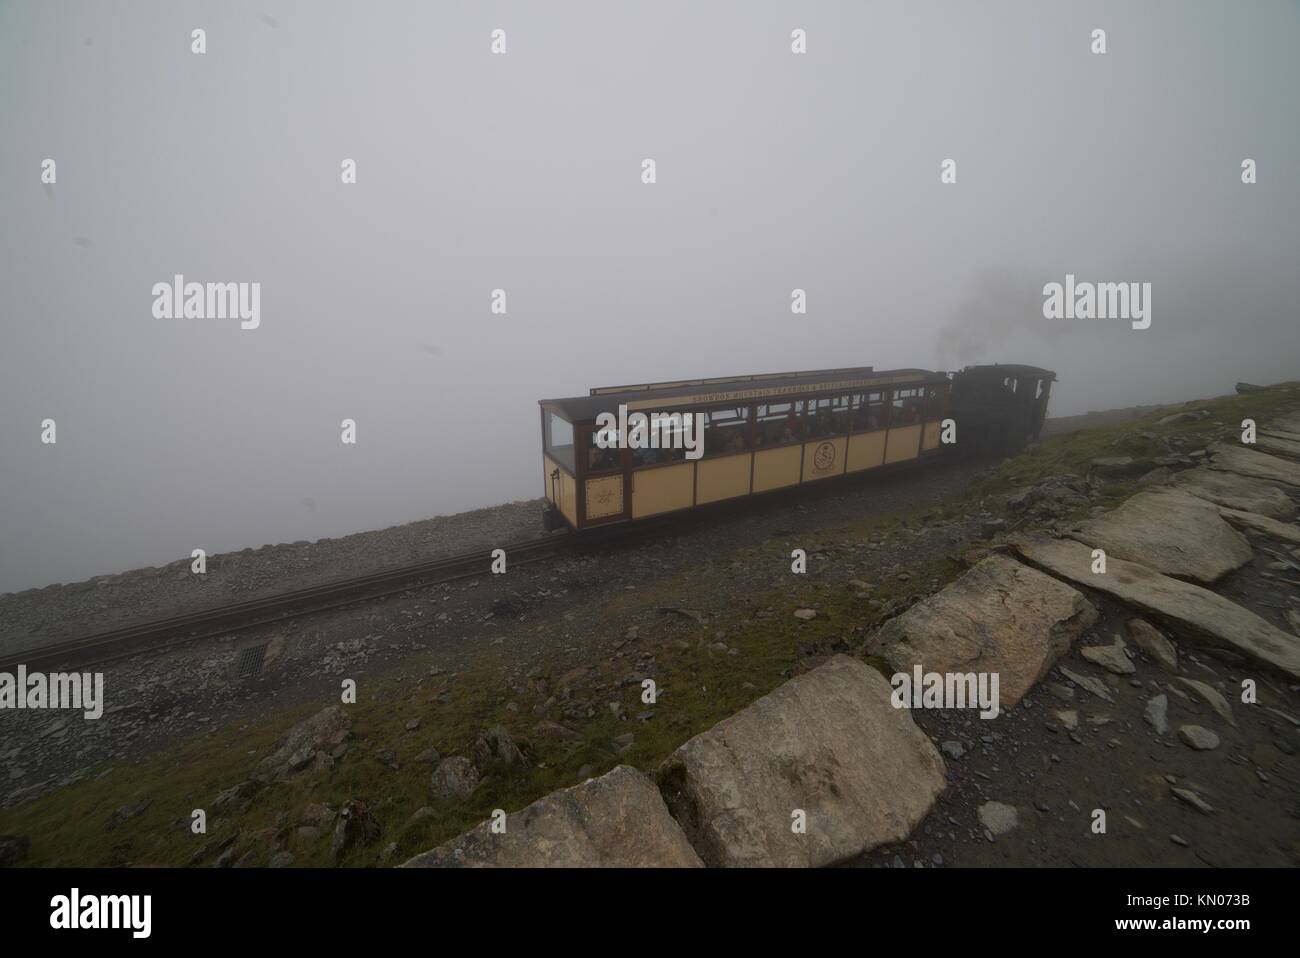 Railway track along Snowdon Mountain in Snowdonia National Park, Wales. Stock Photo